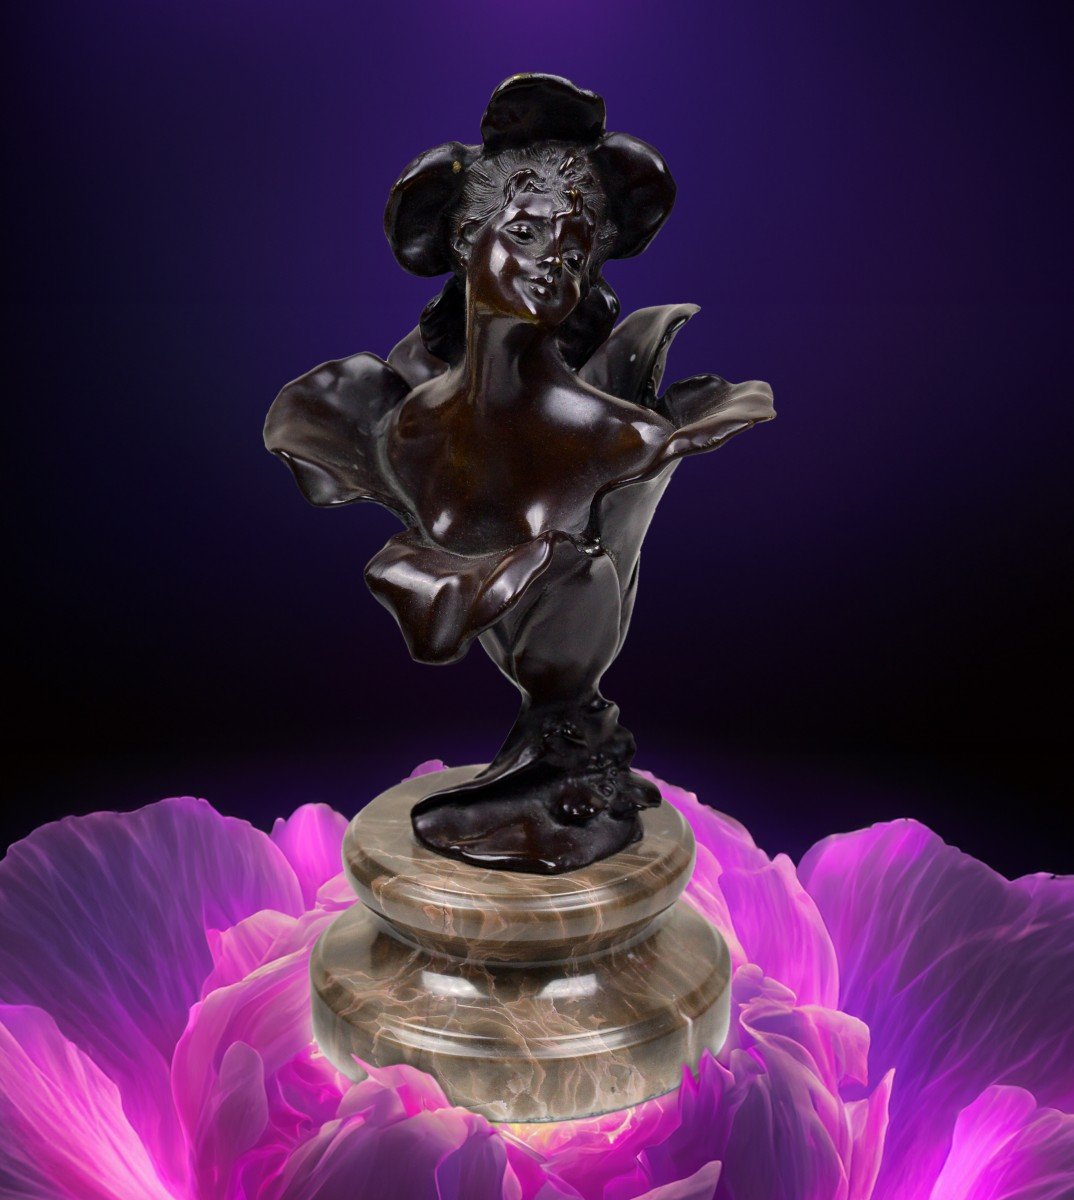 Figurine Of Thumbelina Patinated Bronze N Stone Base 19th Century Art Nouveau